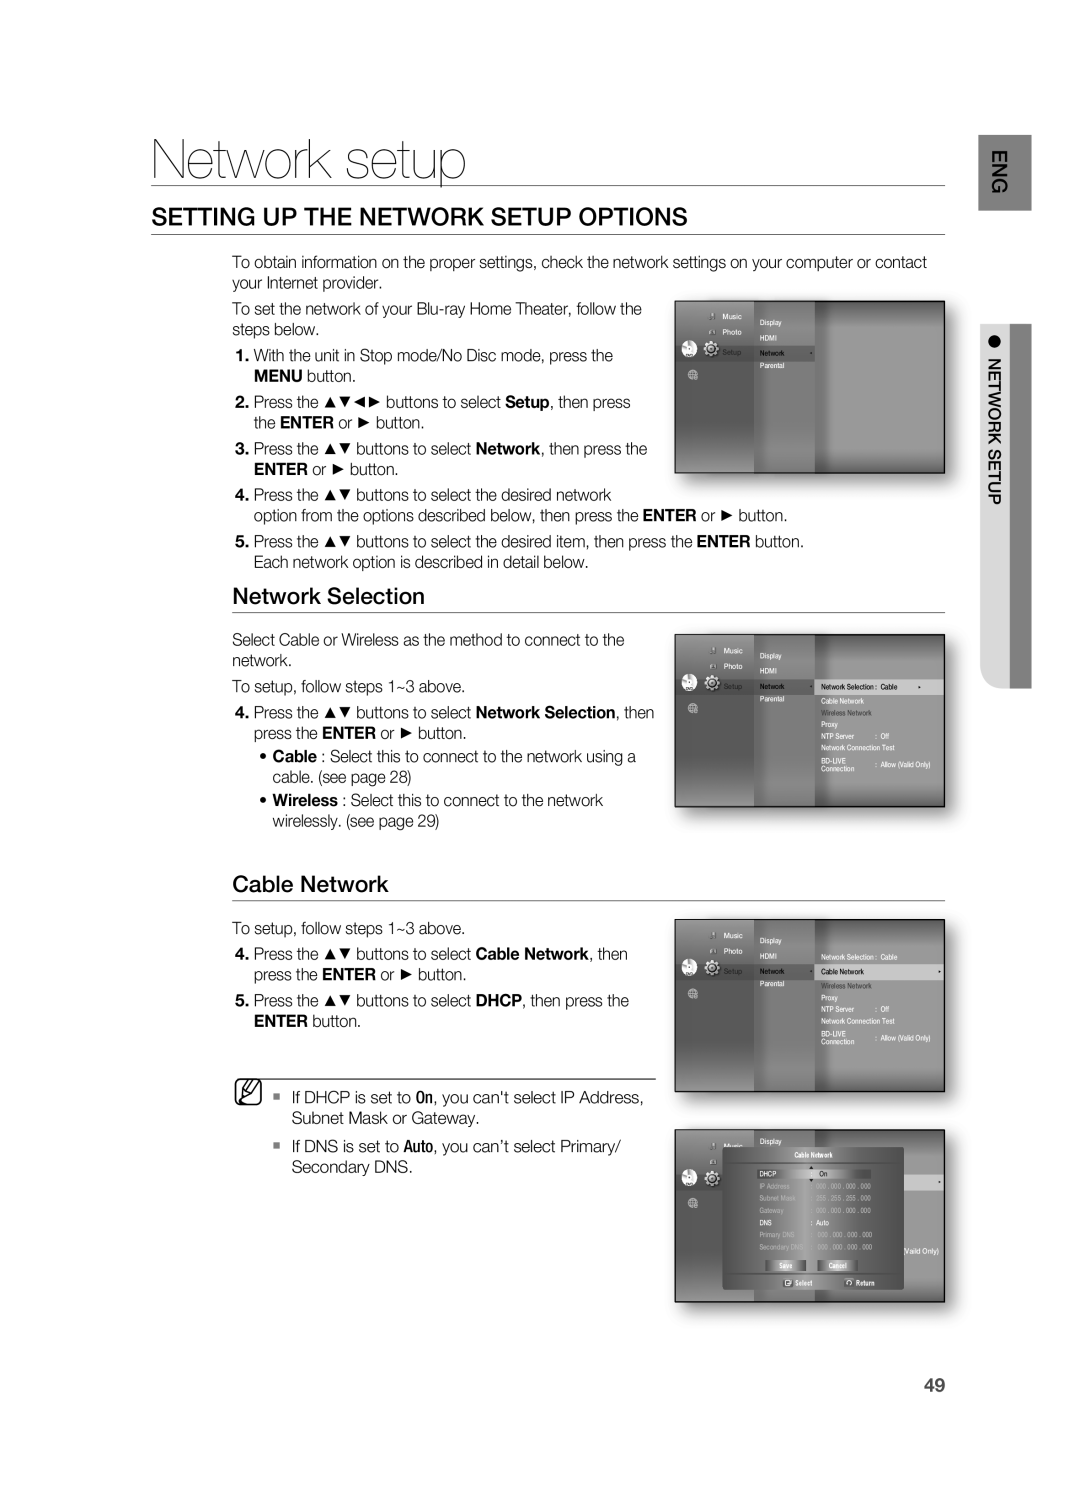 Samsung HT-BD8200 Setting Up The Network Setup Options, Network Selection, Cable Network, Network setup, steps below 